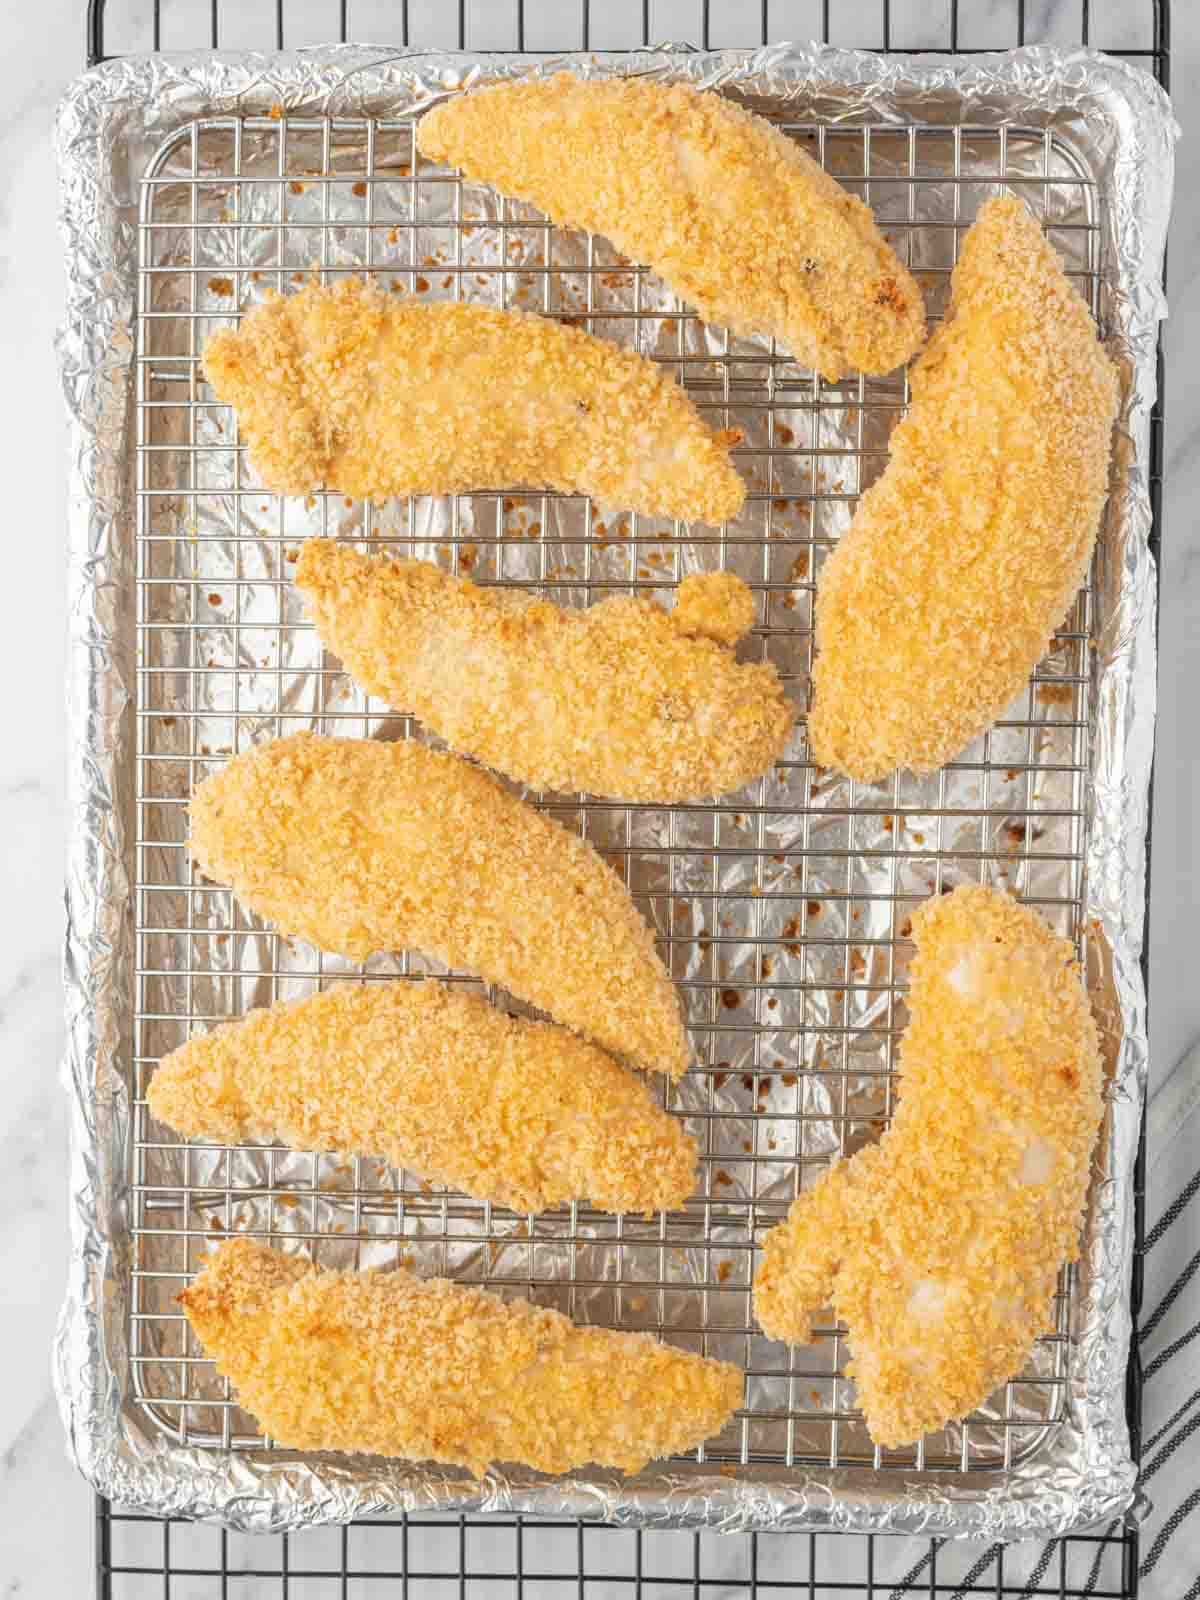 How to bake crispy chicken tenders.